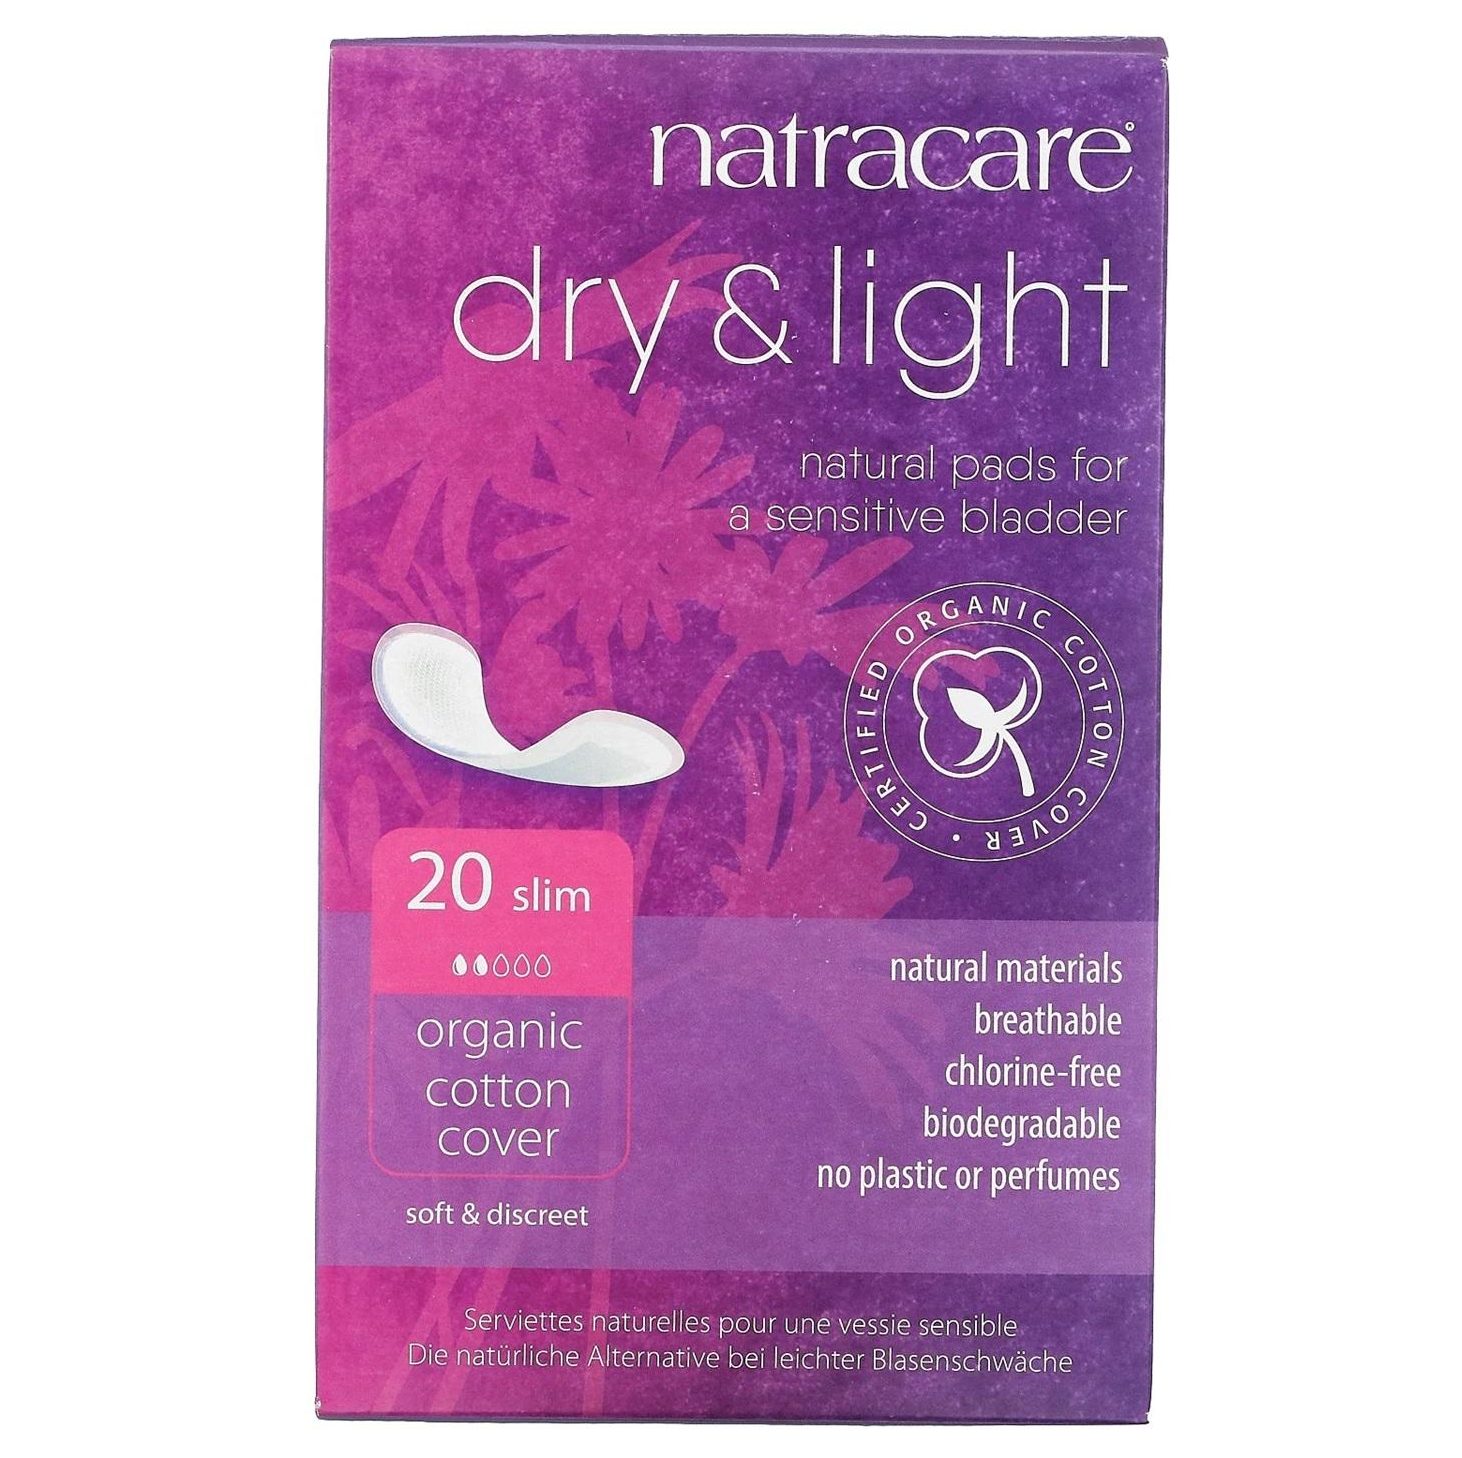 Natracare dry & light